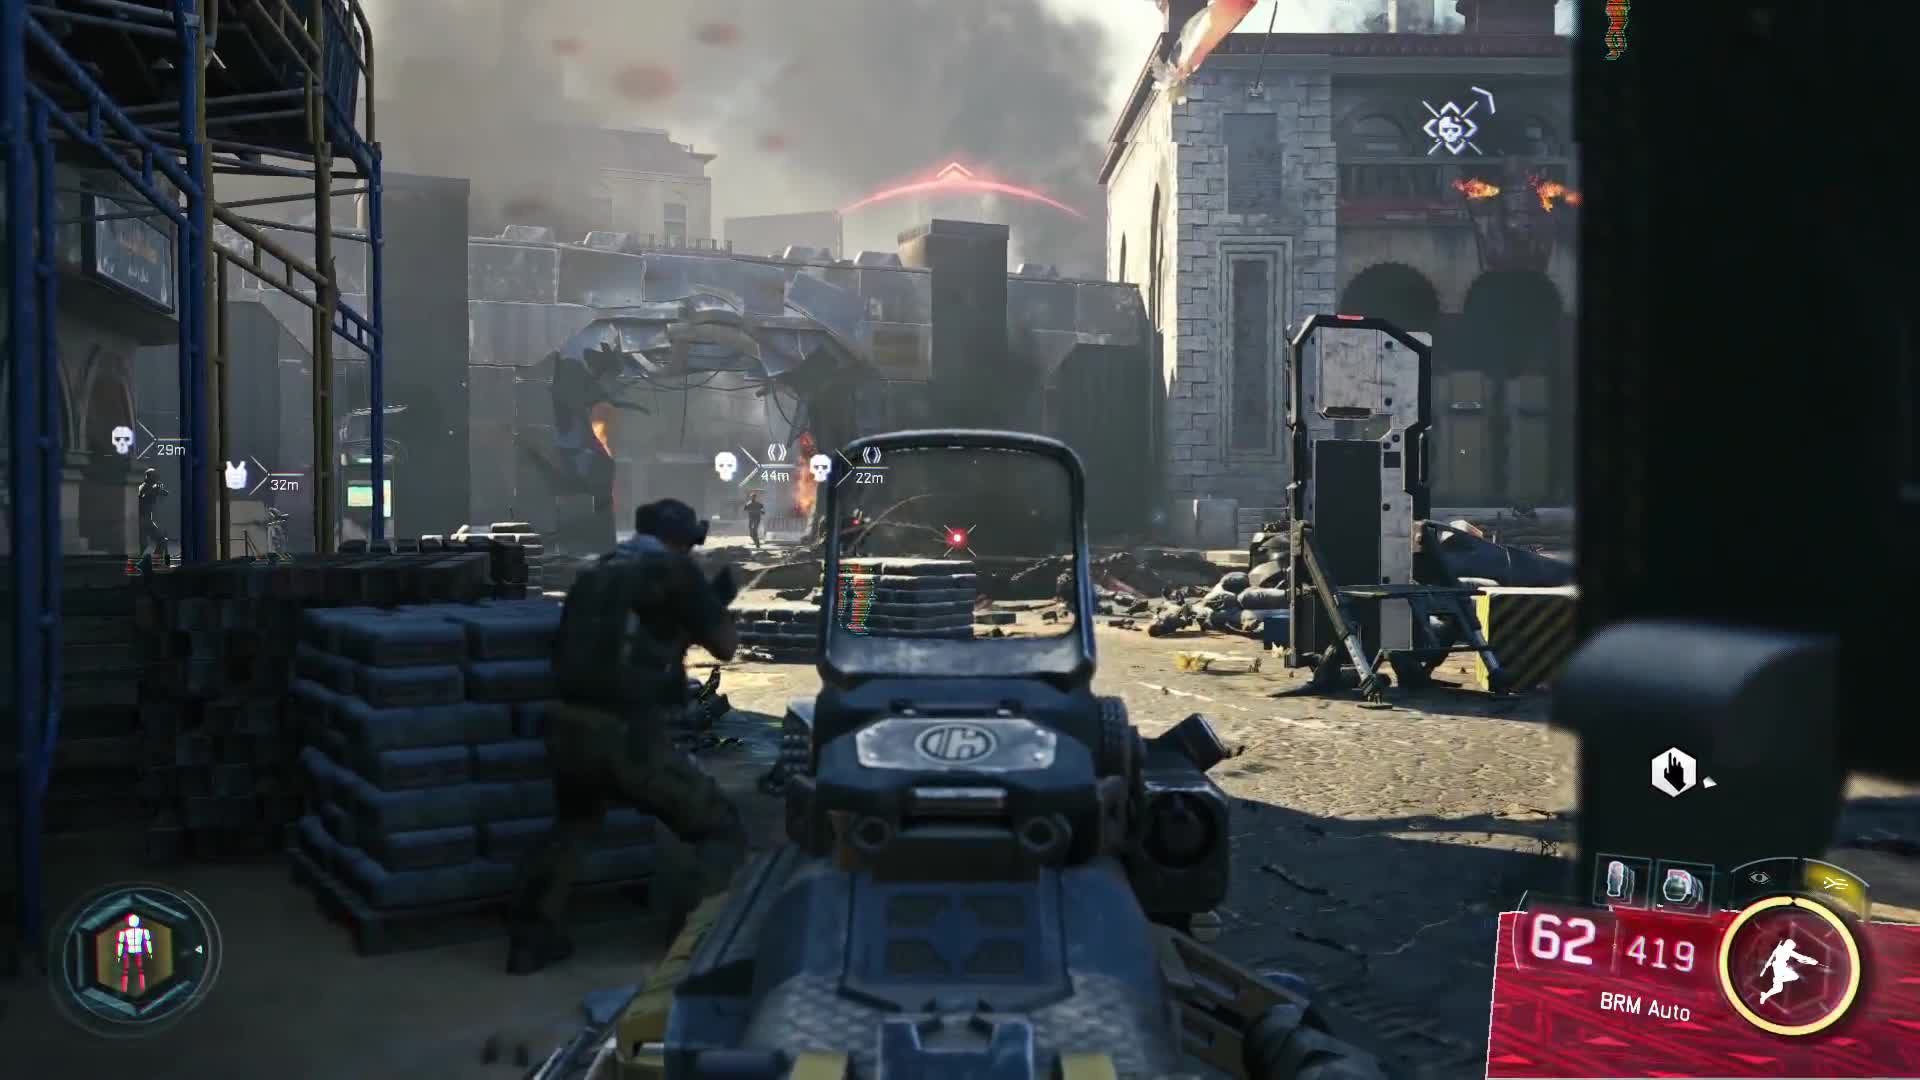 Call of Duty: Black Ops III - Tactical Abilities